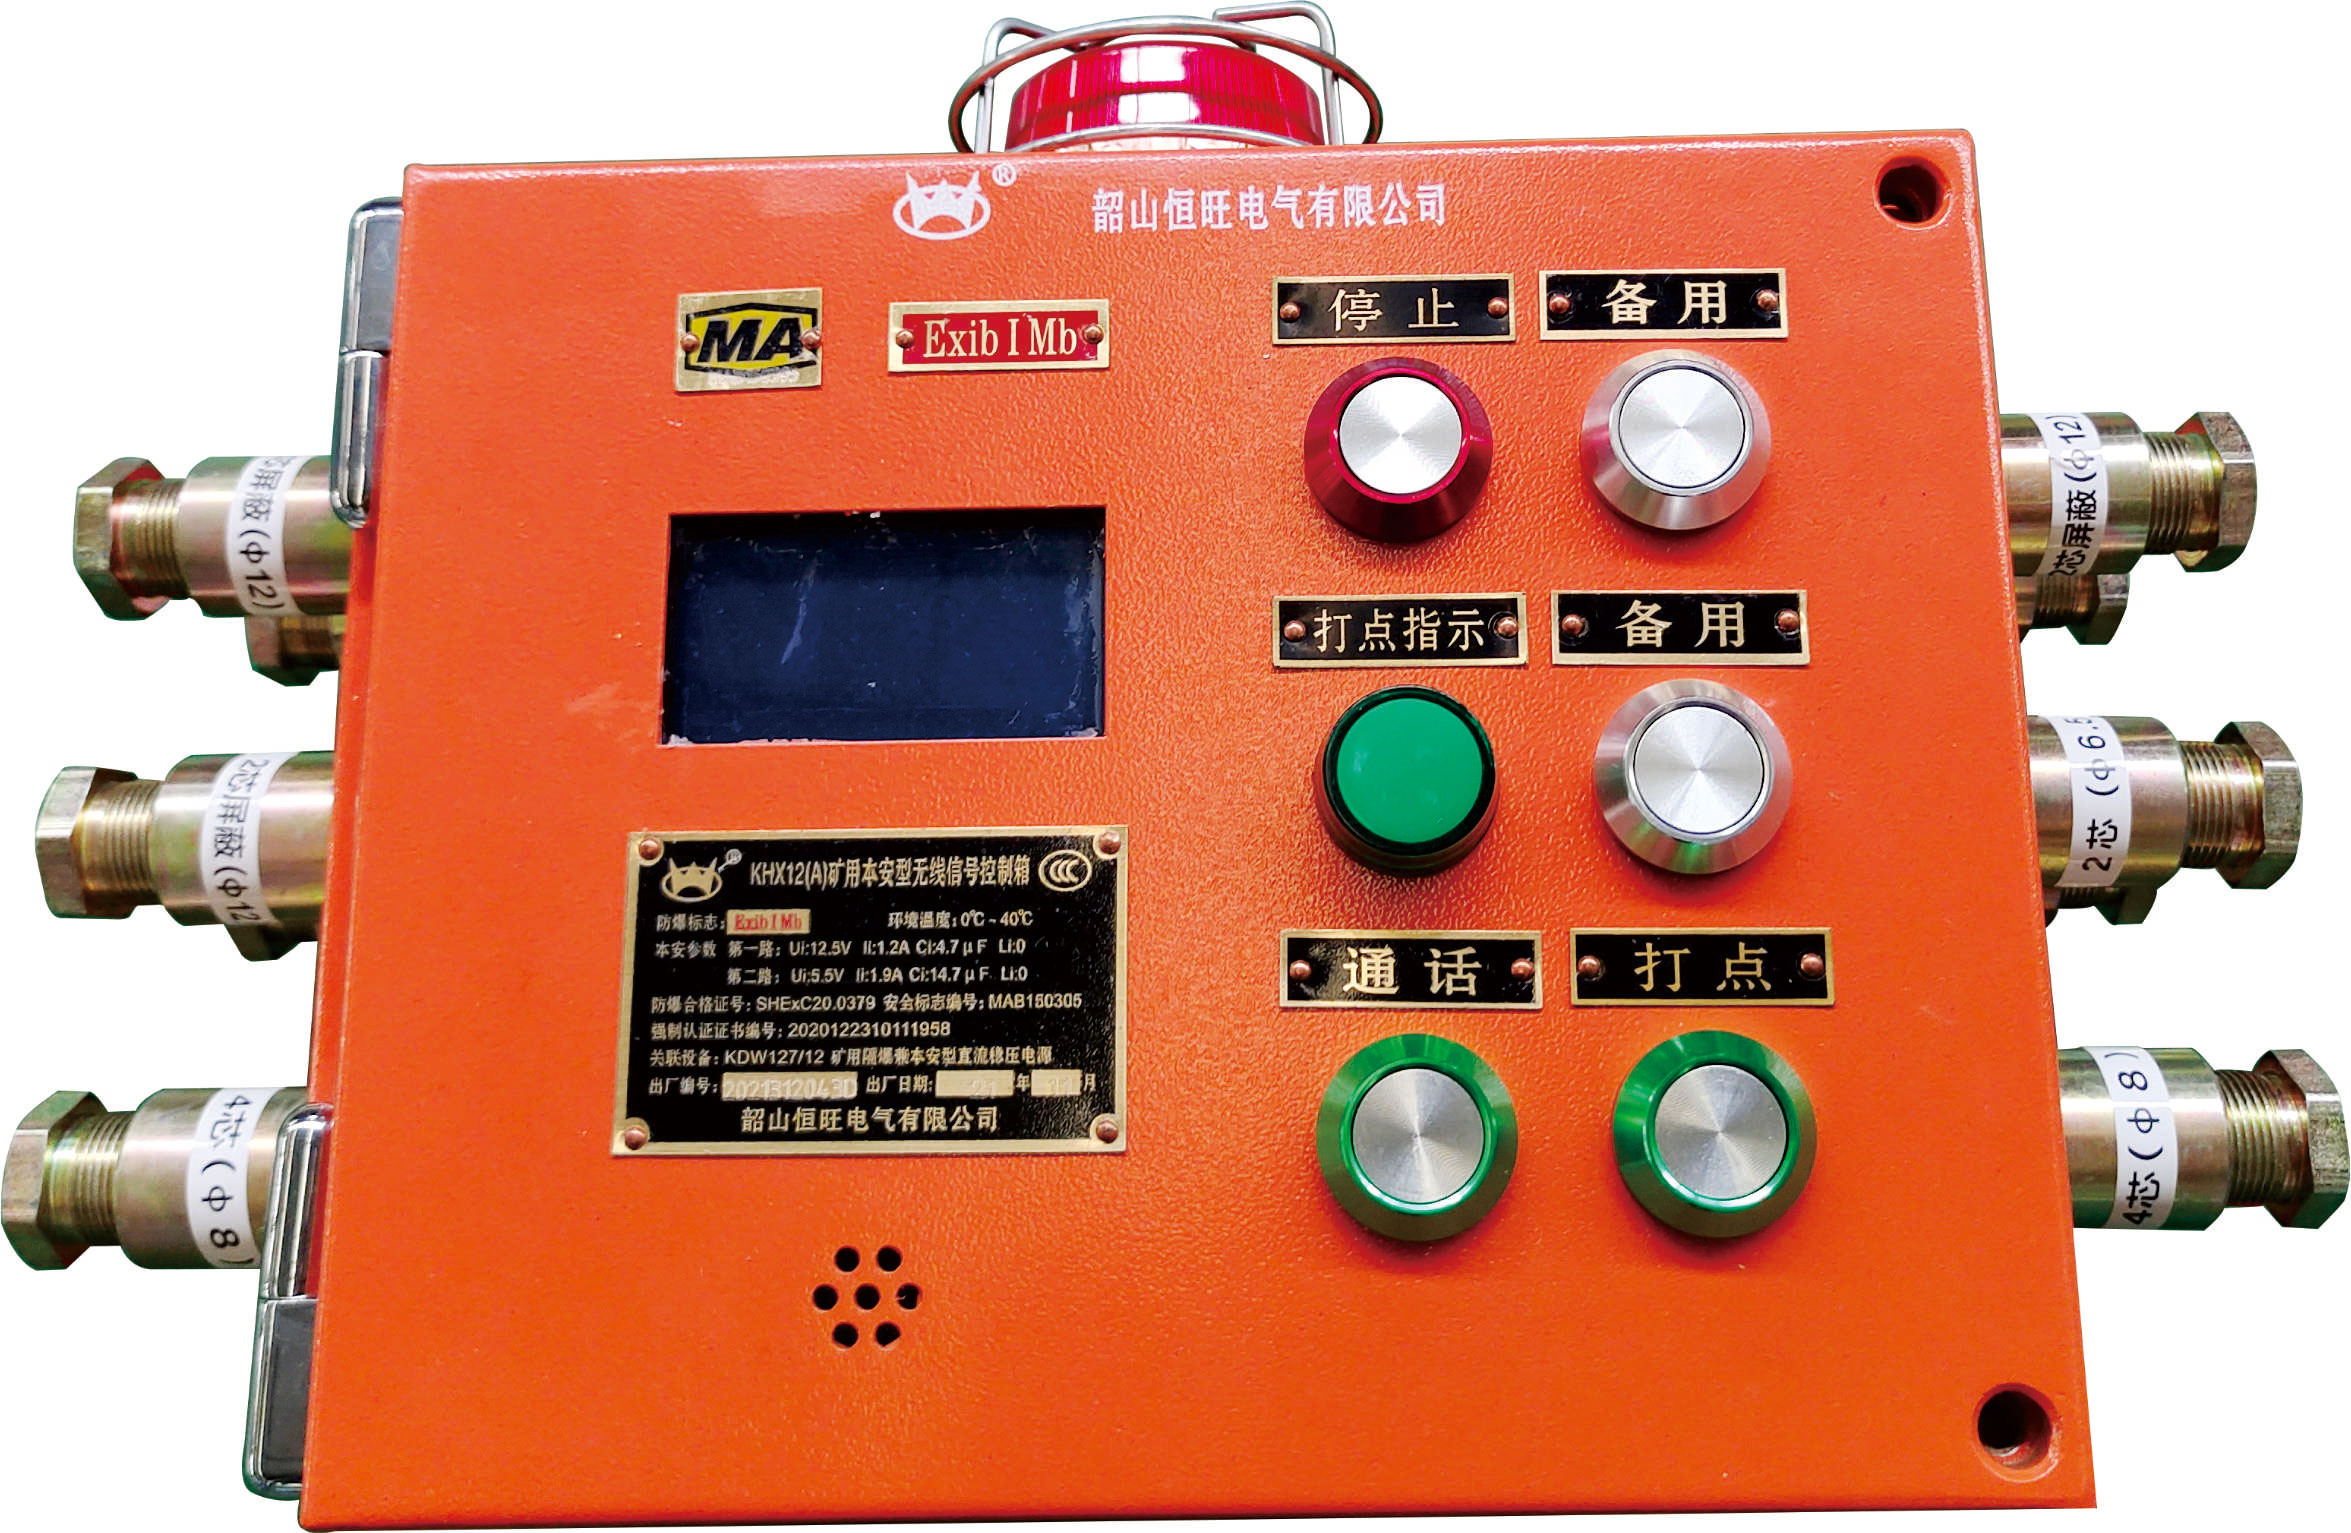 KHX12 (A) Mining Intrinsic Safety Wireless Signal Control Box